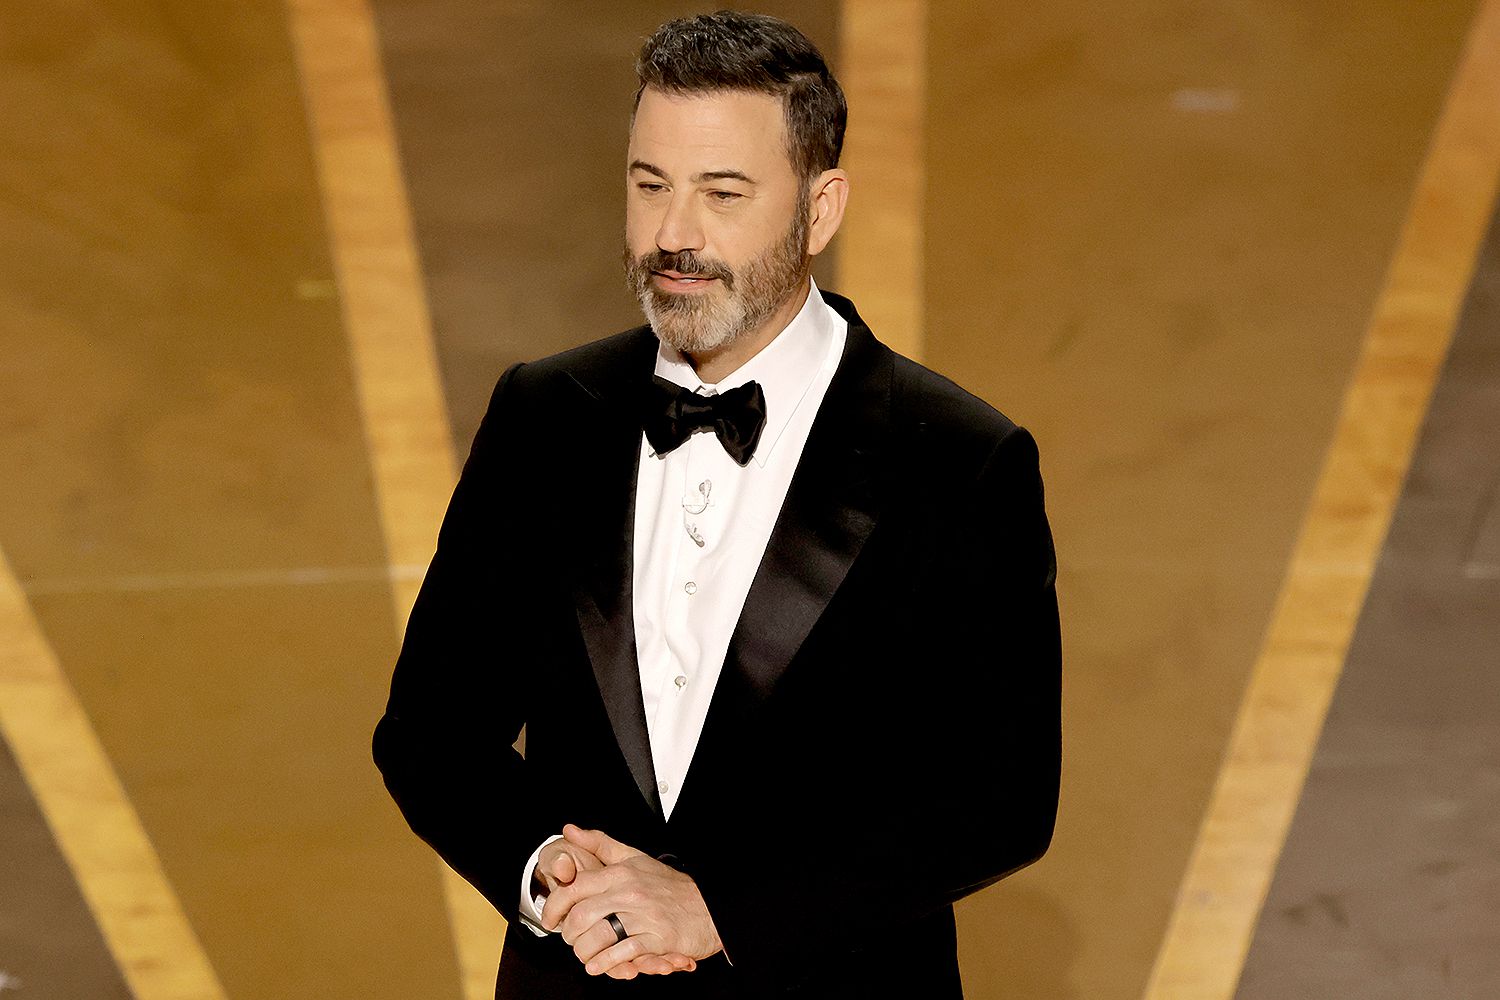 95th Oscars host, Jimmy Kimmel